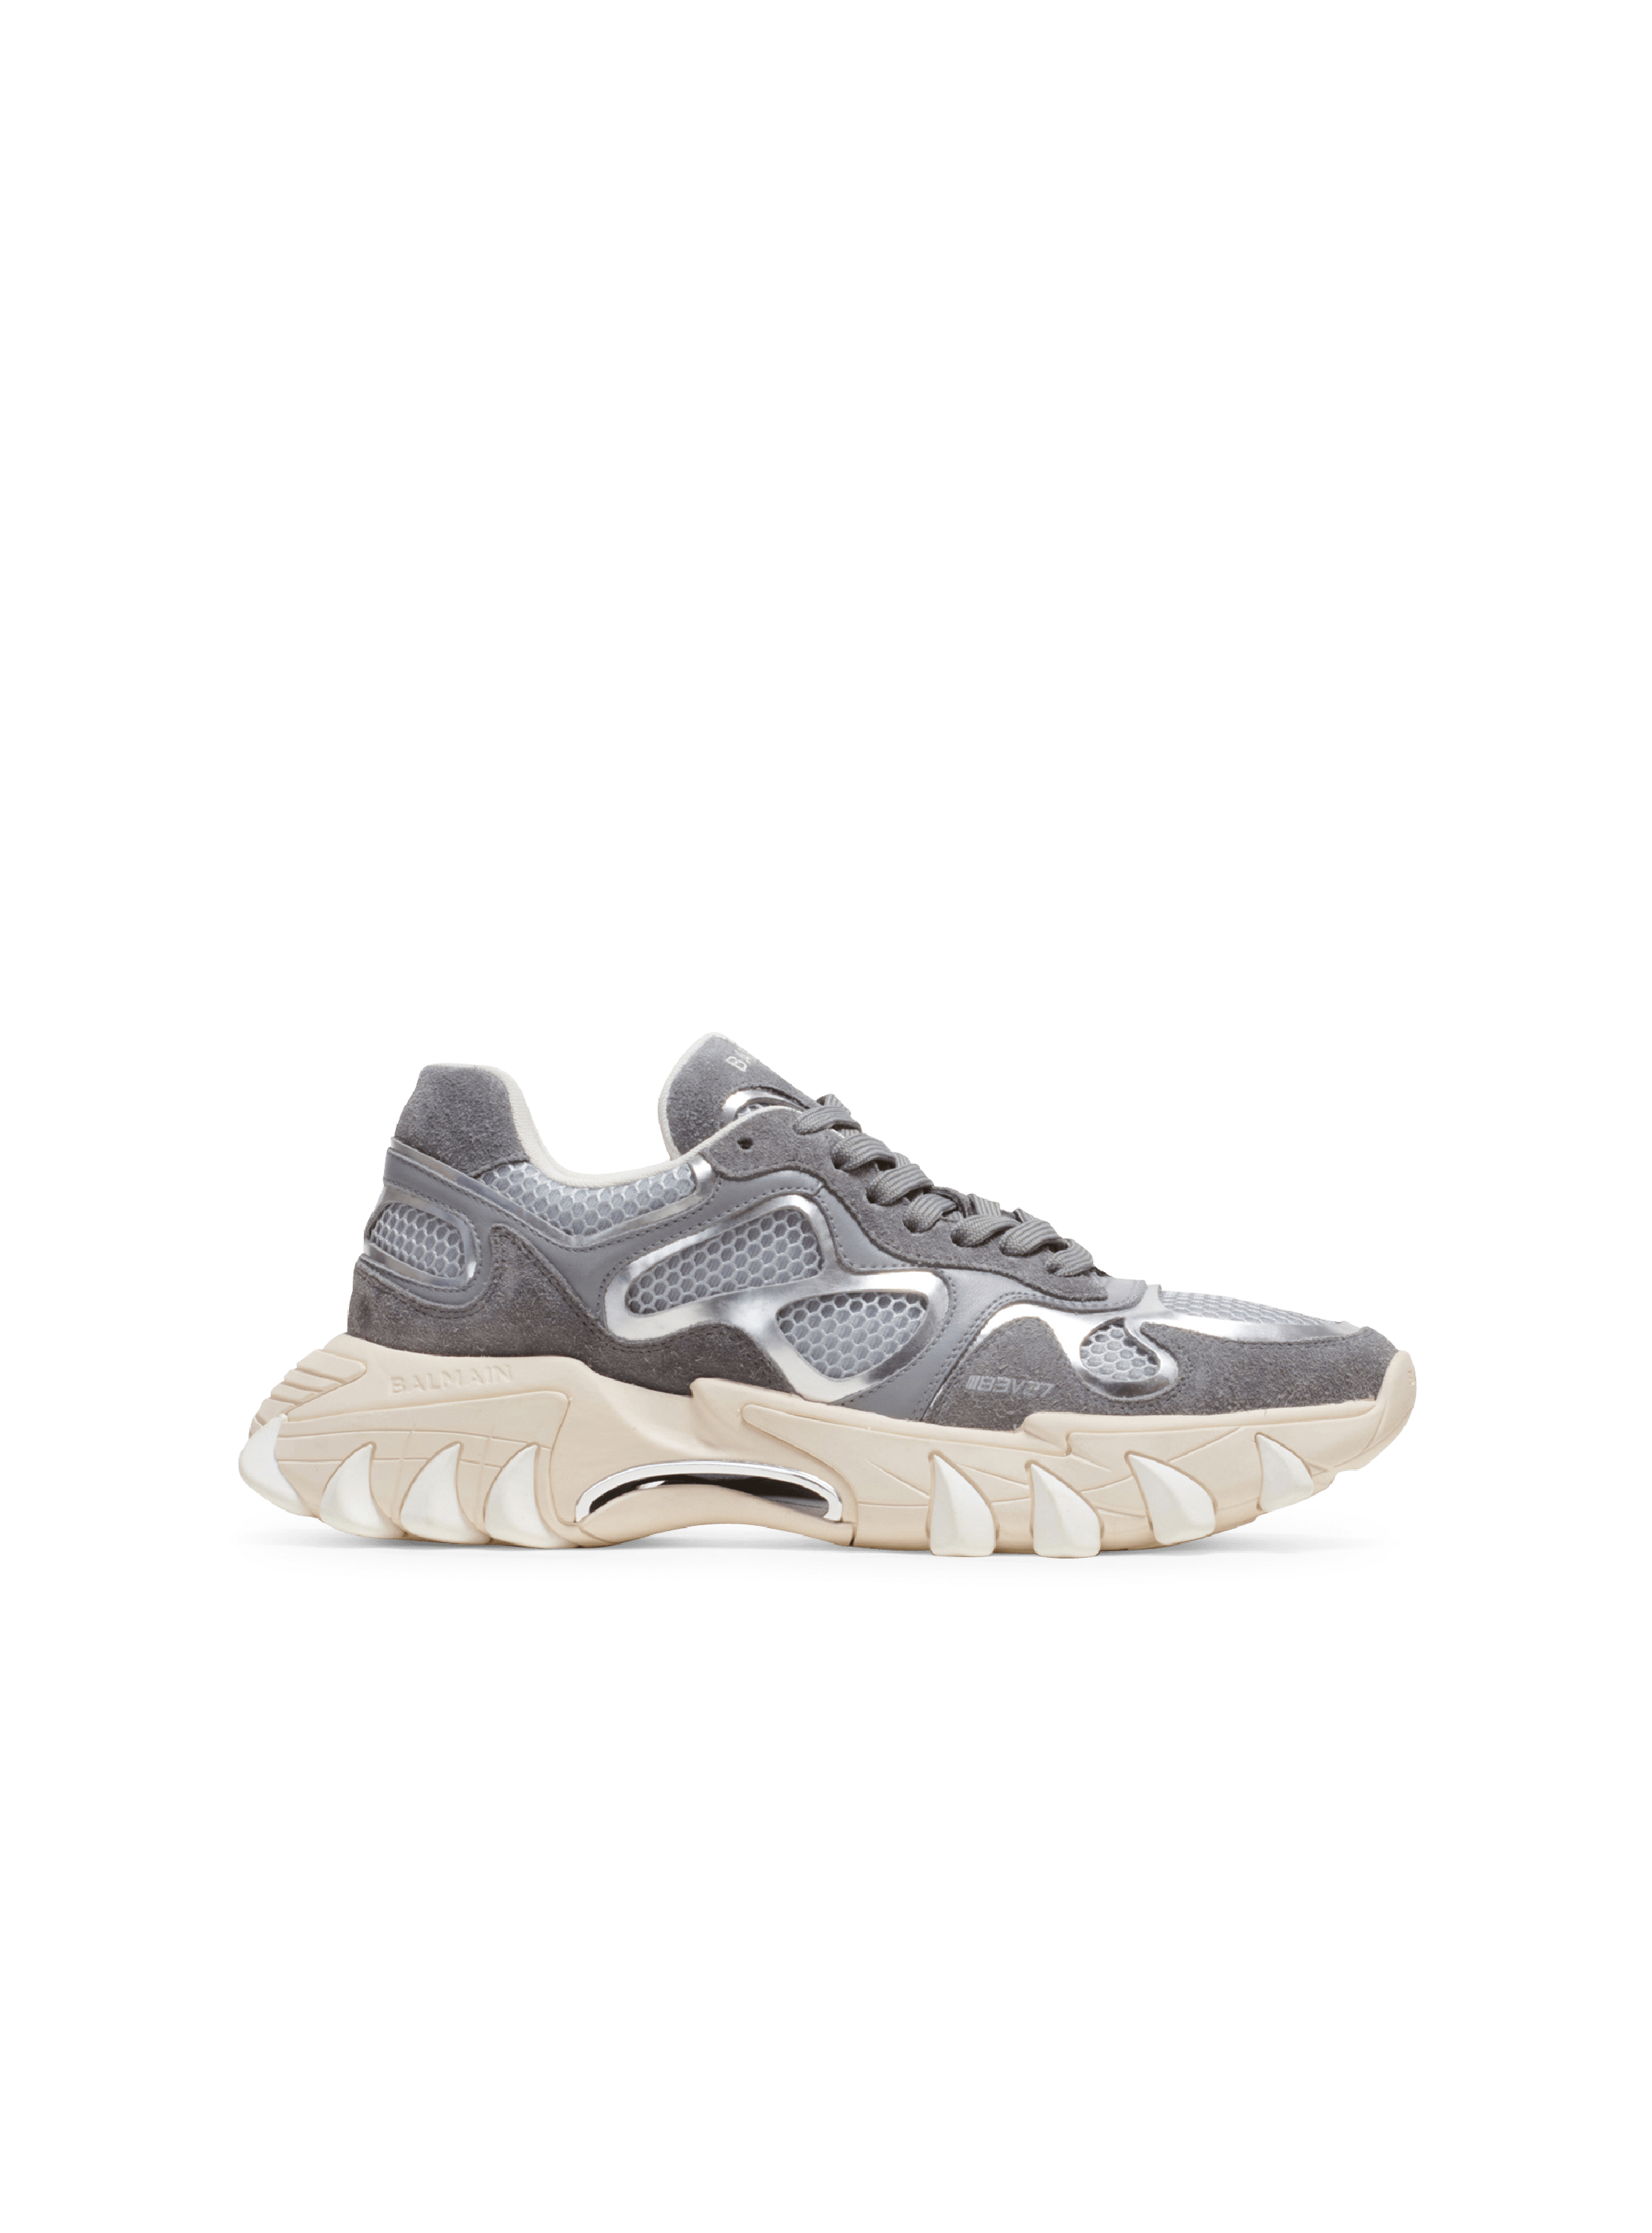 Sneakers B-East in pelle metallizzata e rete, grigio, hi-res